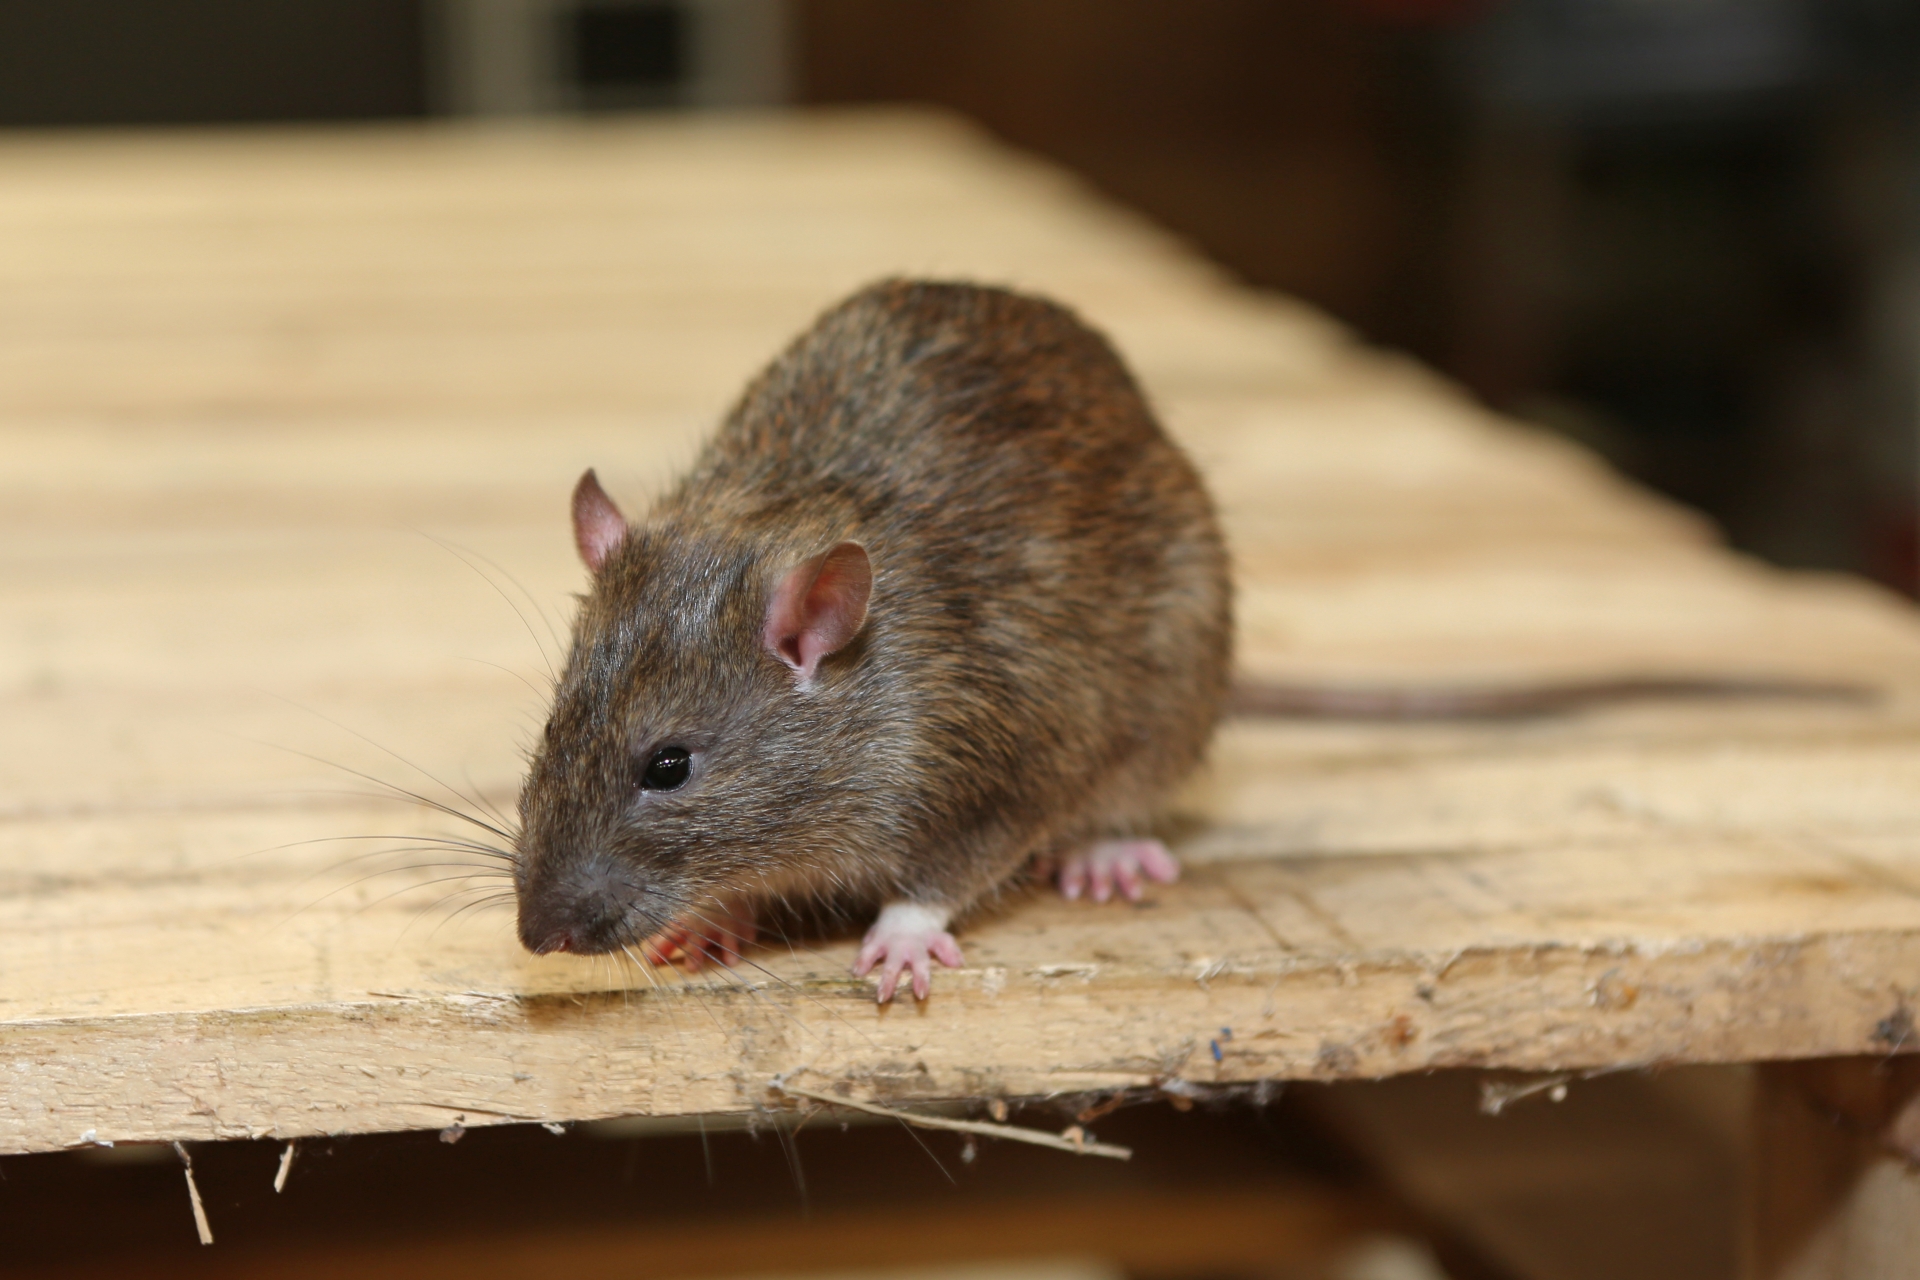 Rat extermination, Pest Control in Bermondsey, Borough, Southwark, SE1. Call Now 020 8166 9746